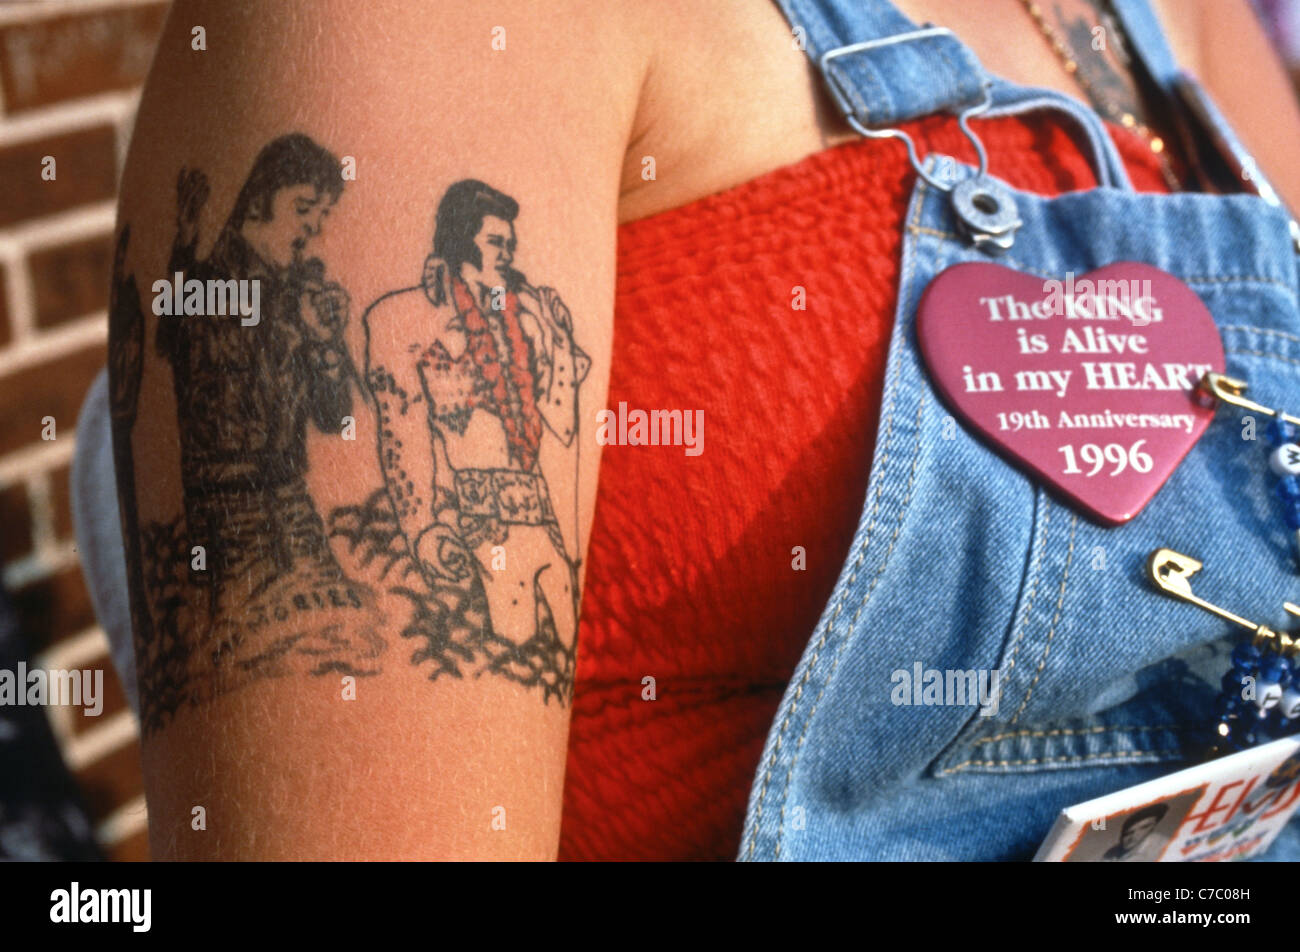 60 Elvis Presley Tattoos For Men  King Of Rock And Roll Design Ideas